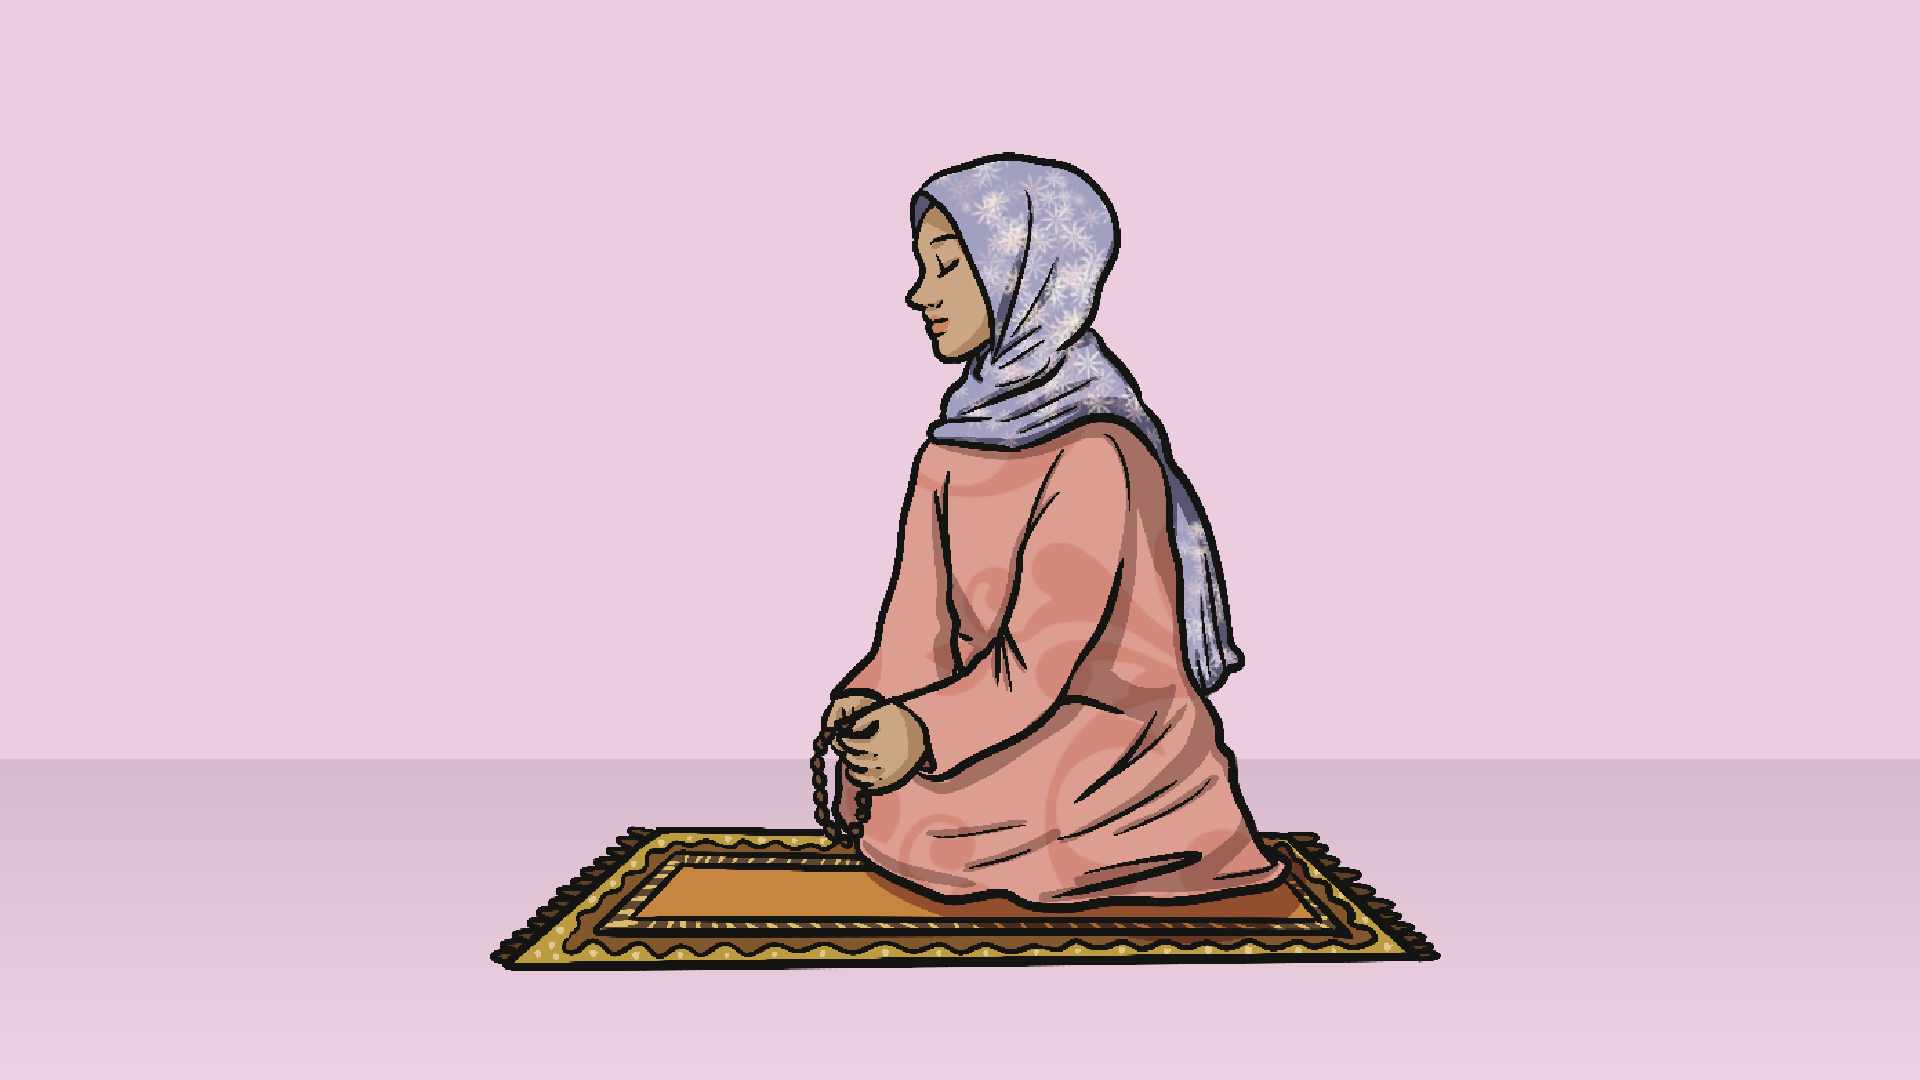 Illustration of a Muslim young woman wearing a purple hijab praying while holding beads on a matt.